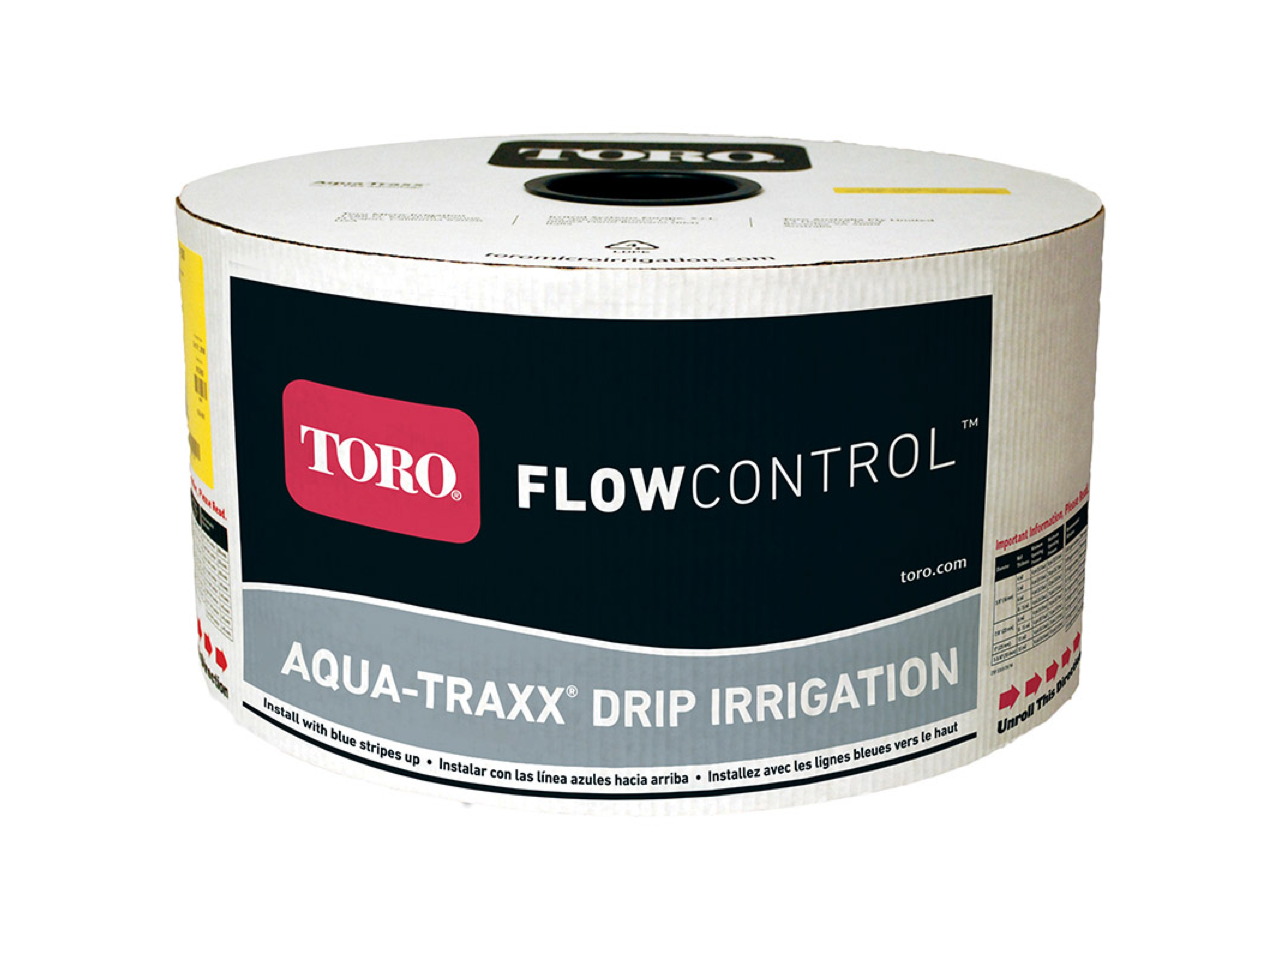 The Toro Company Aqua-Traxx FlowControl